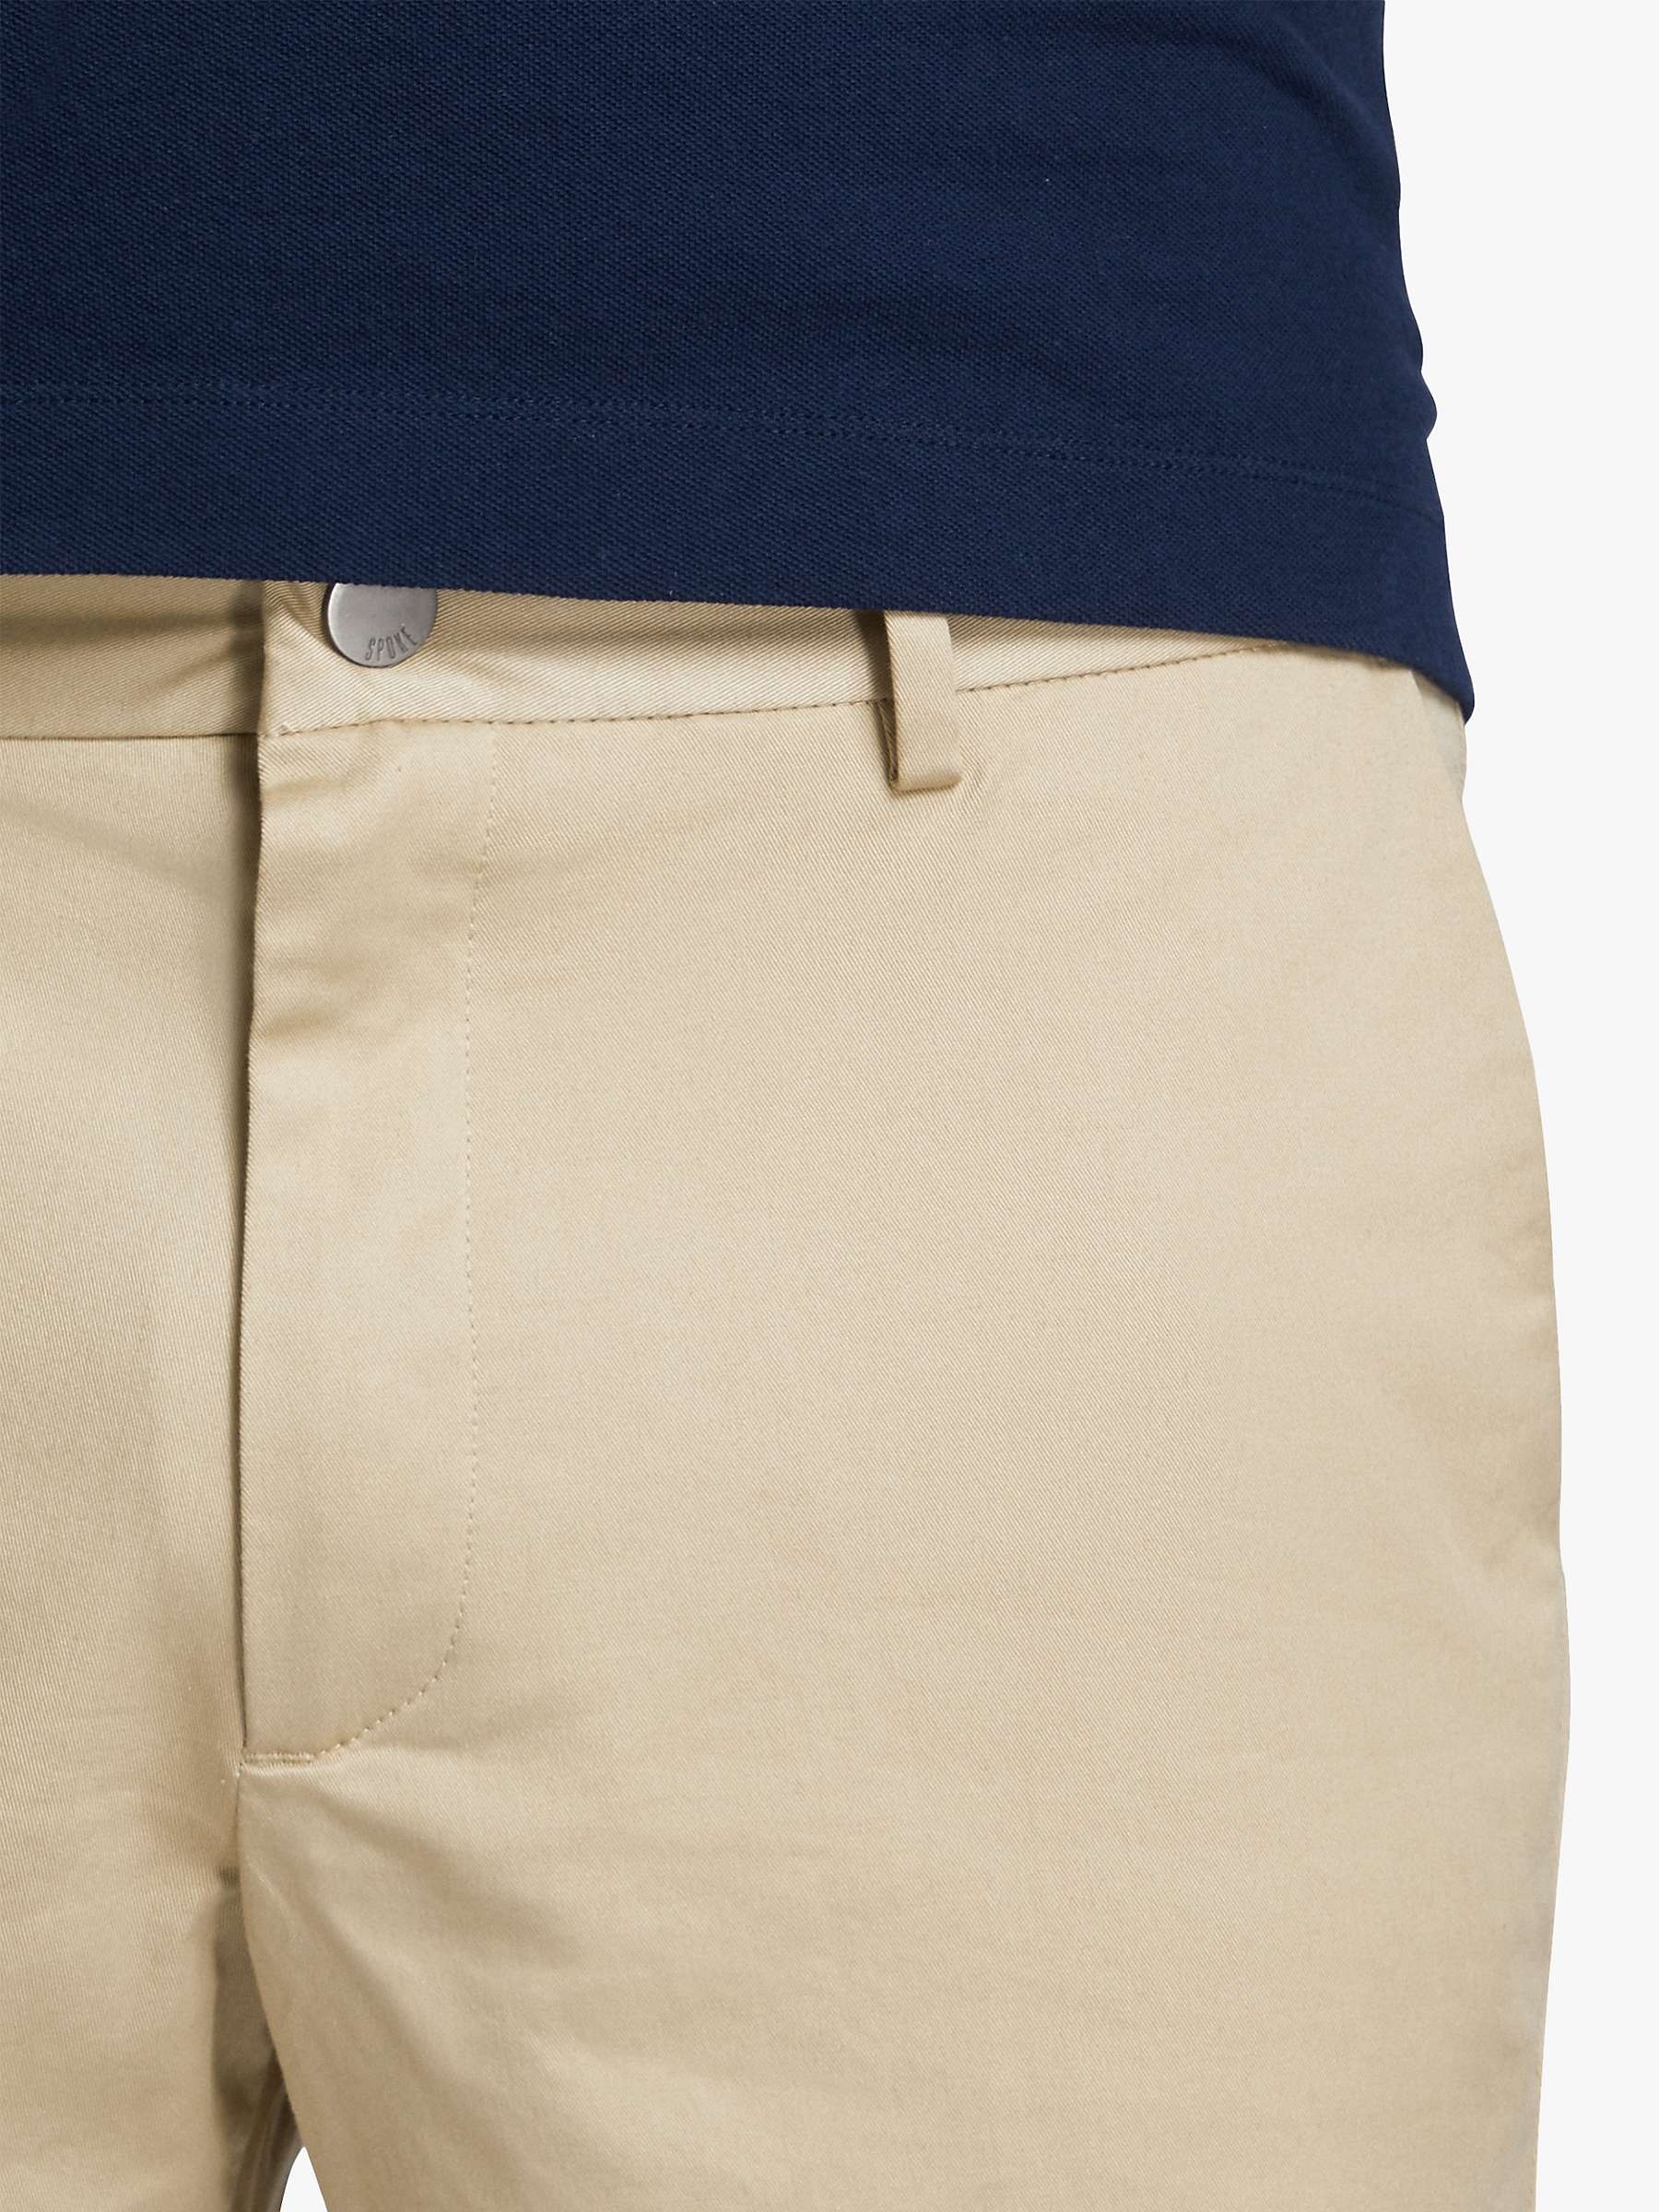 Buy SPOKE Sharps Cotton Blend Narrow Thigh Shorts Online at johnlewis.com